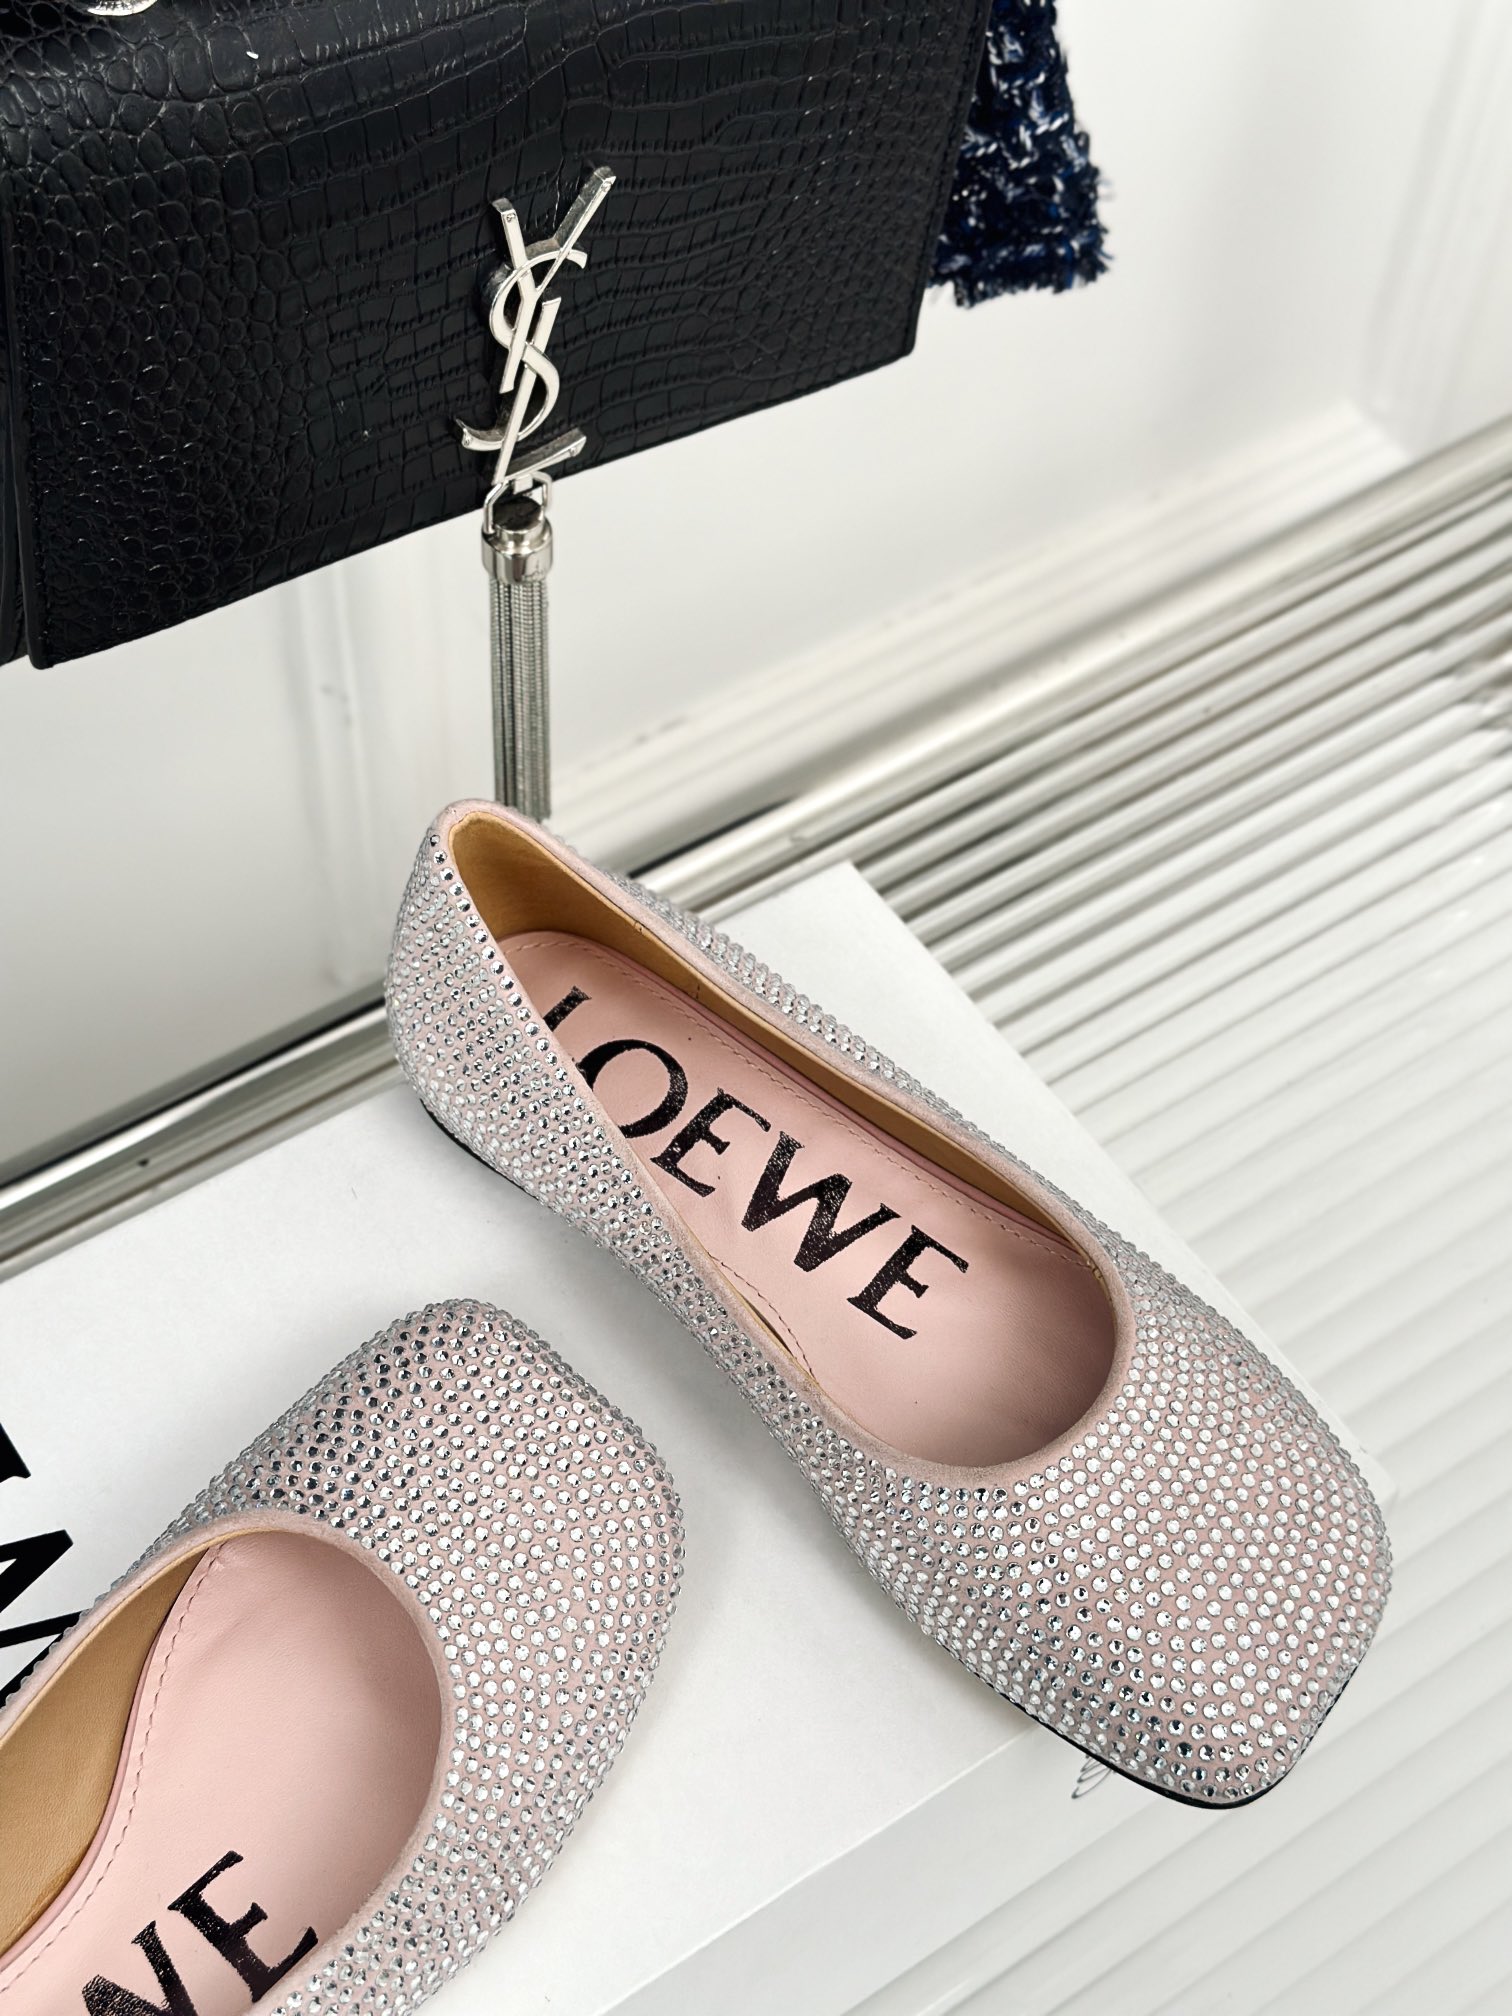 Loewe罗意威24S春夏新品杨幂同款水晶高跟鞋真是越看越上头那种!!!什么神仙鞋也太美了吧！完全仙女下